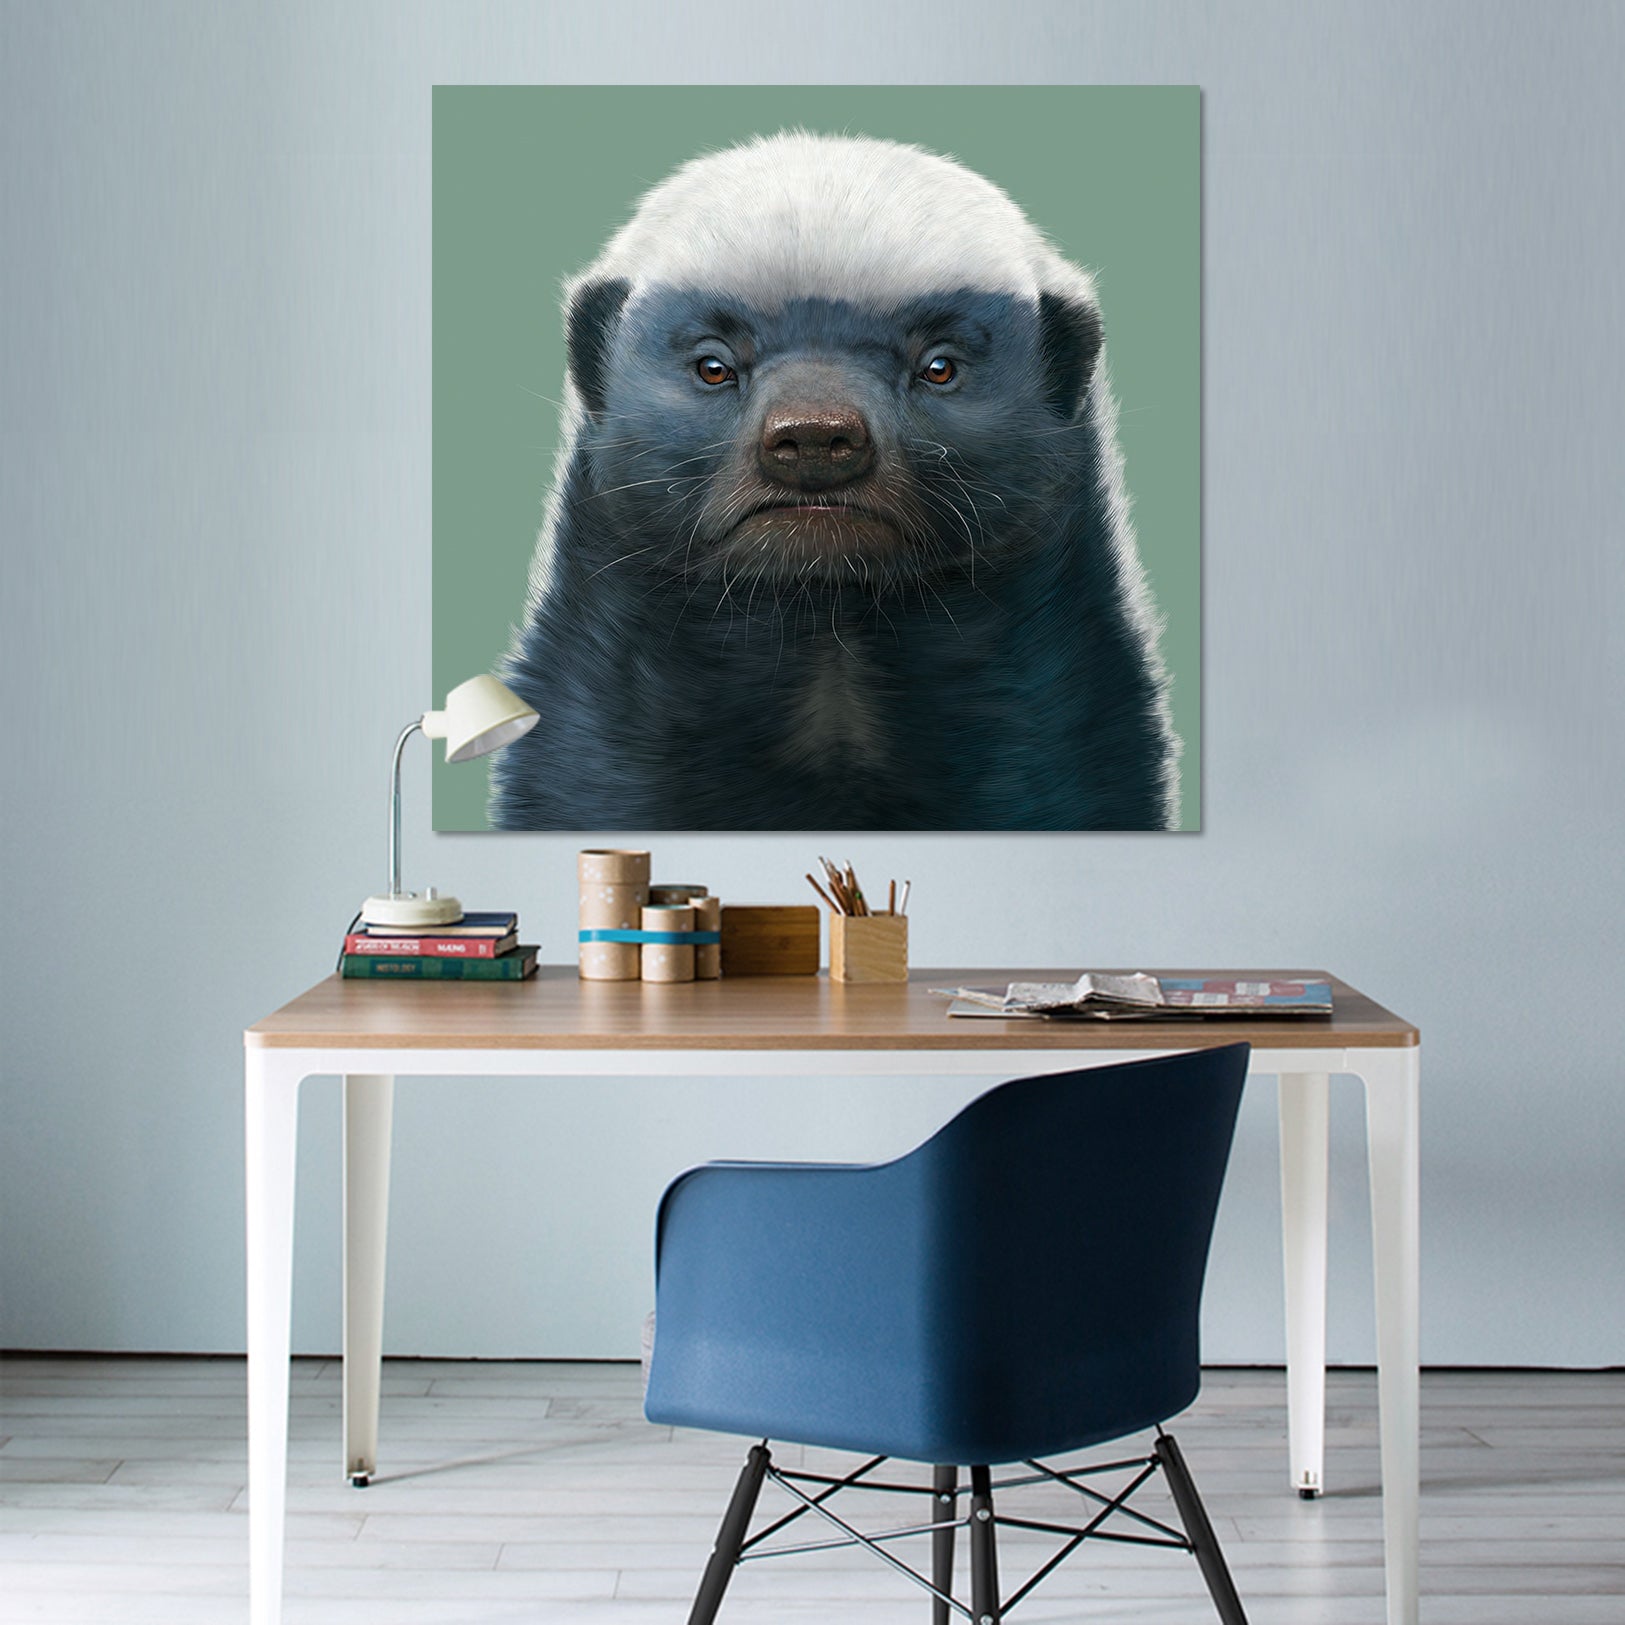 3D Honey Badger Portrait 043 Vincent Hie Wall Sticker